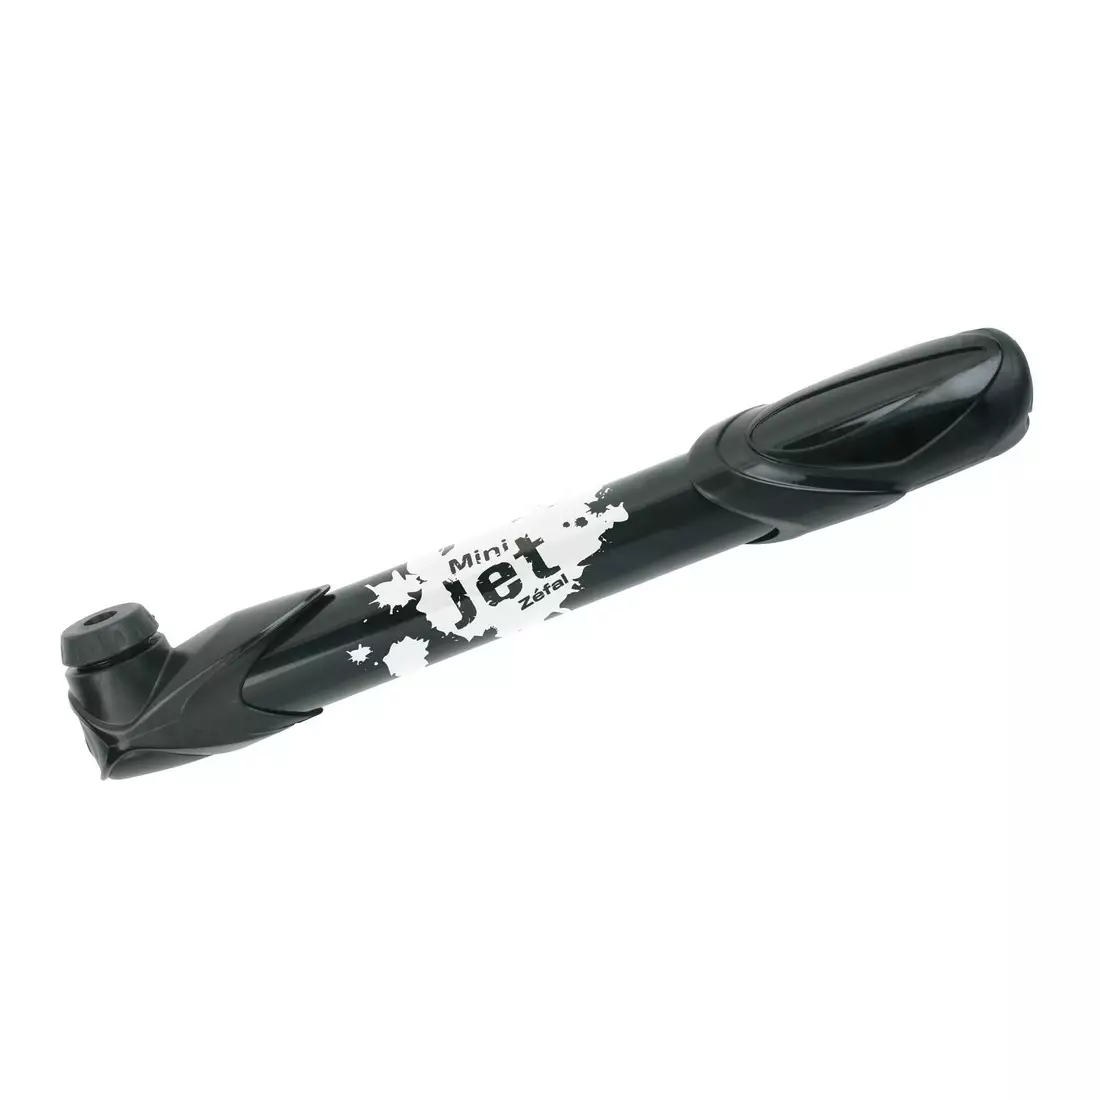 ZEFAL universal mini bicycle pump MINI JET 033300 - black